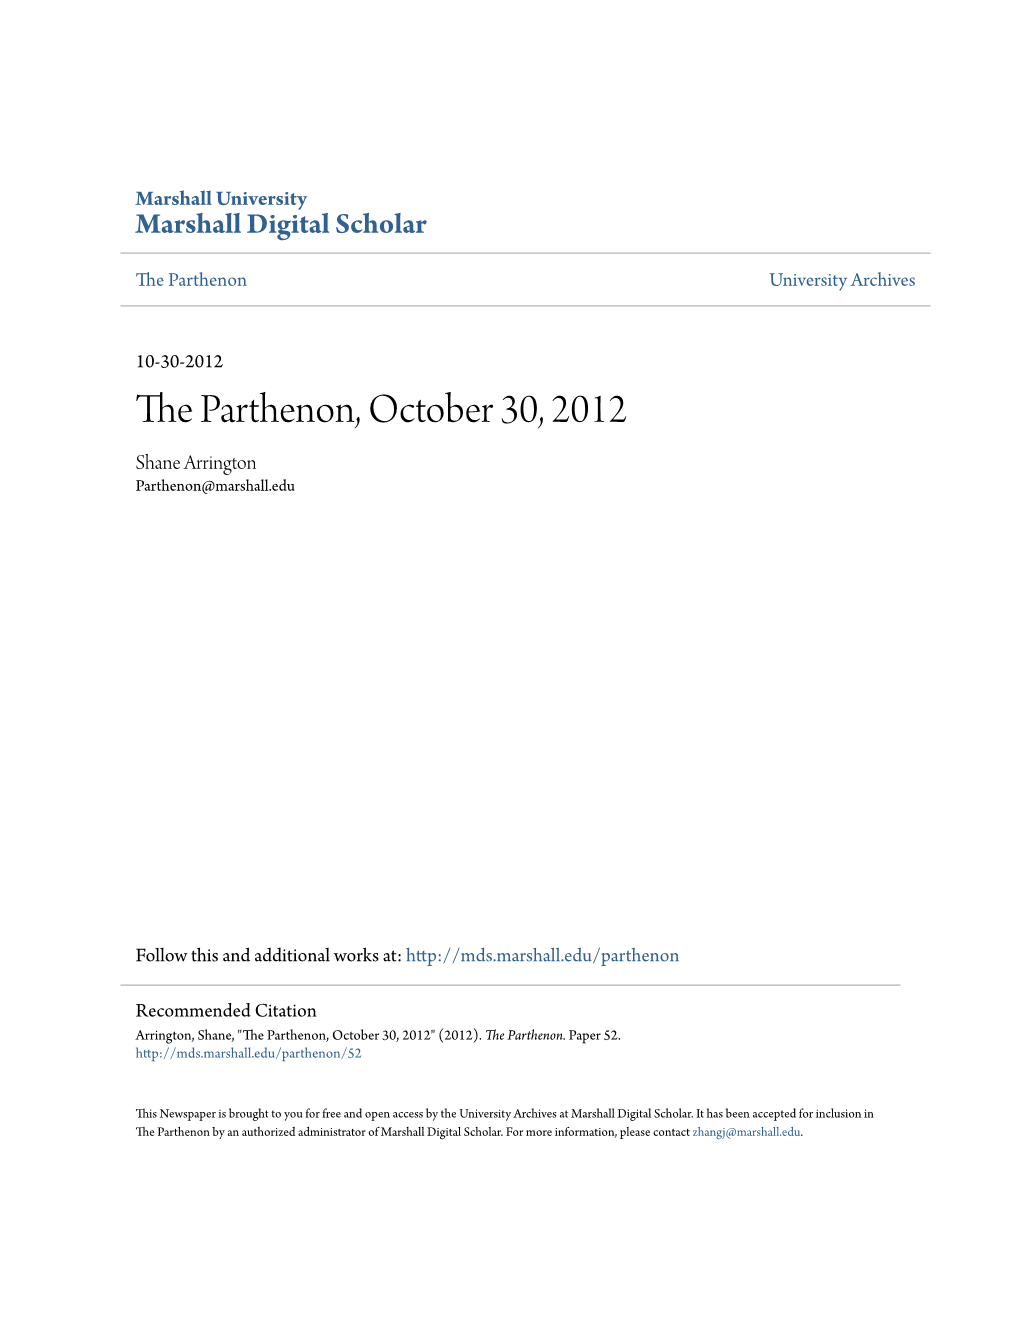 The Parthenon, October 30, 2012